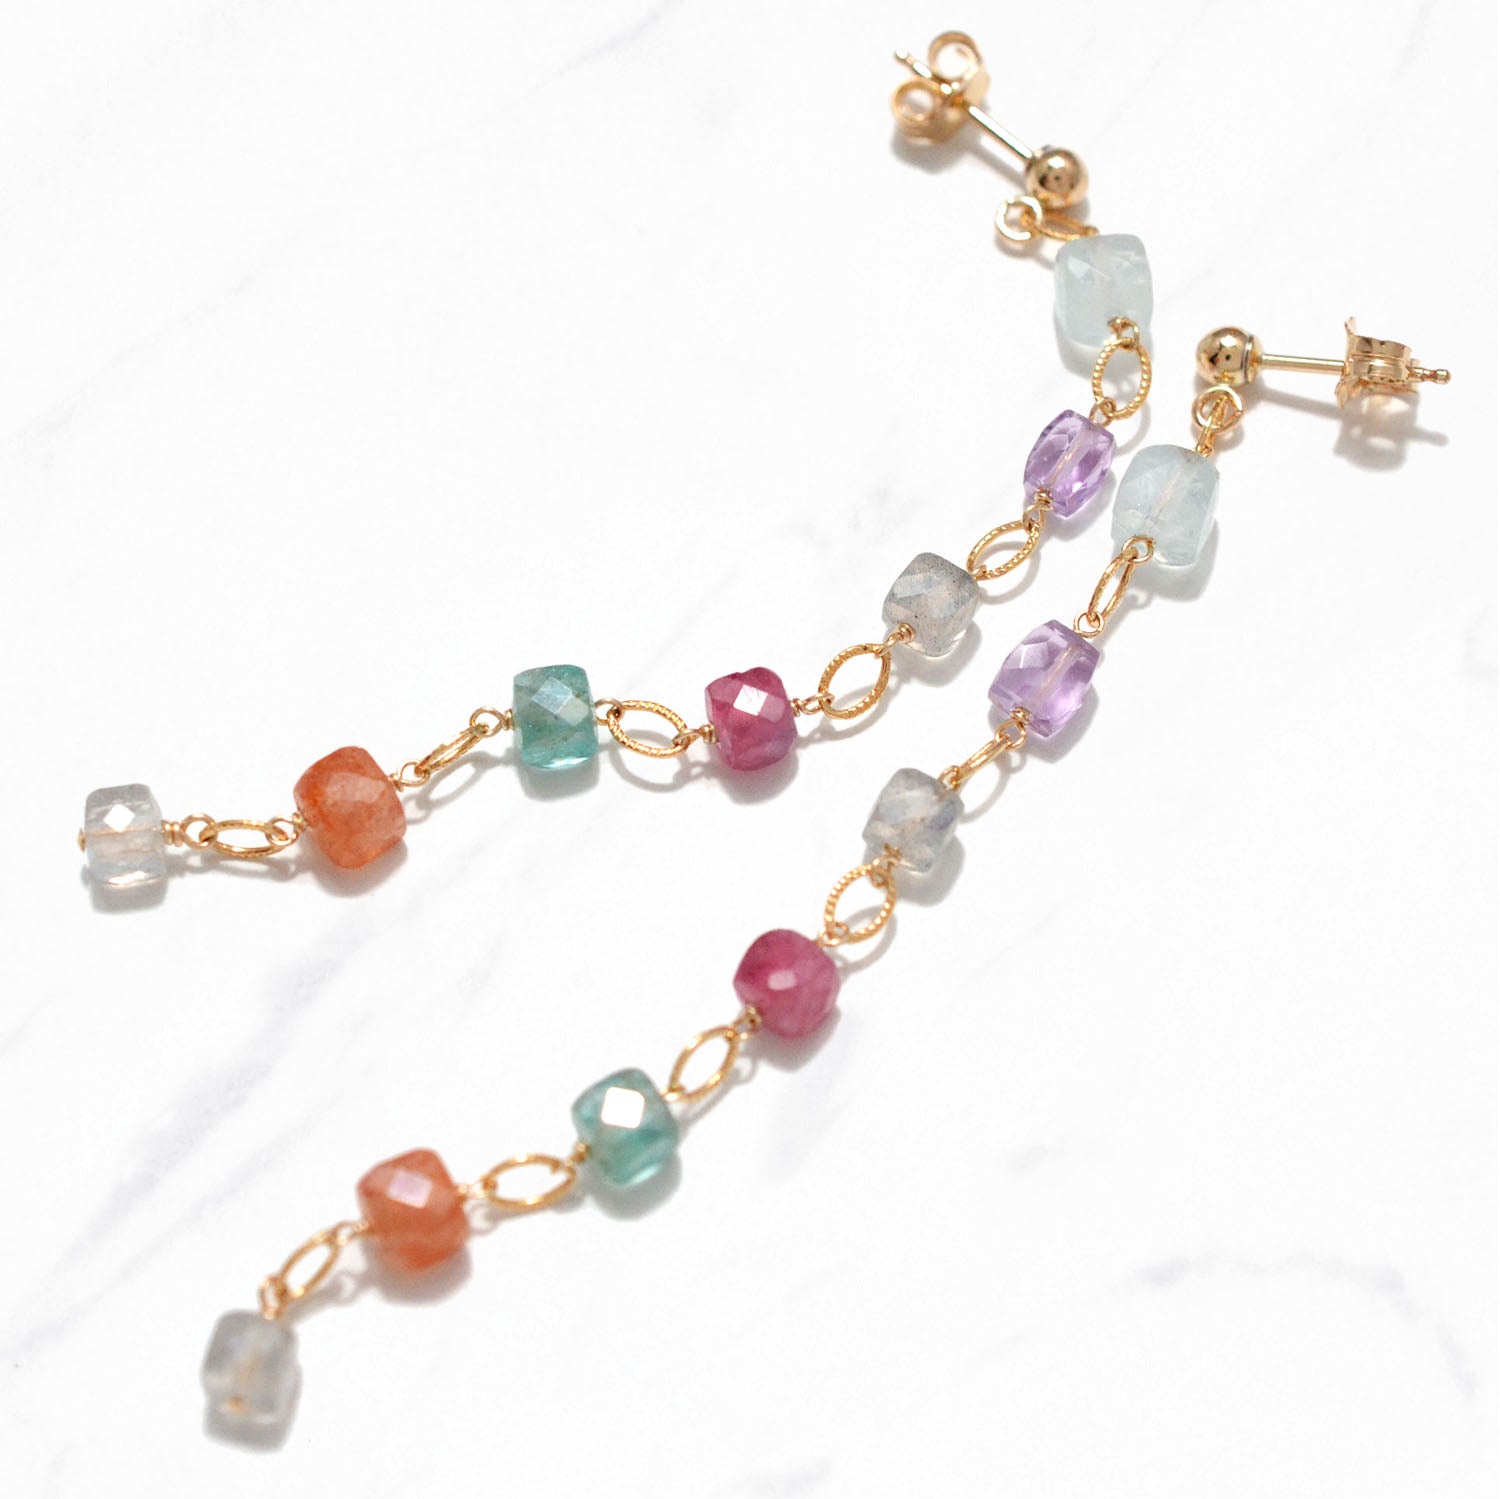 Colorful Gemstones Dangling Earrings (Multicolor)